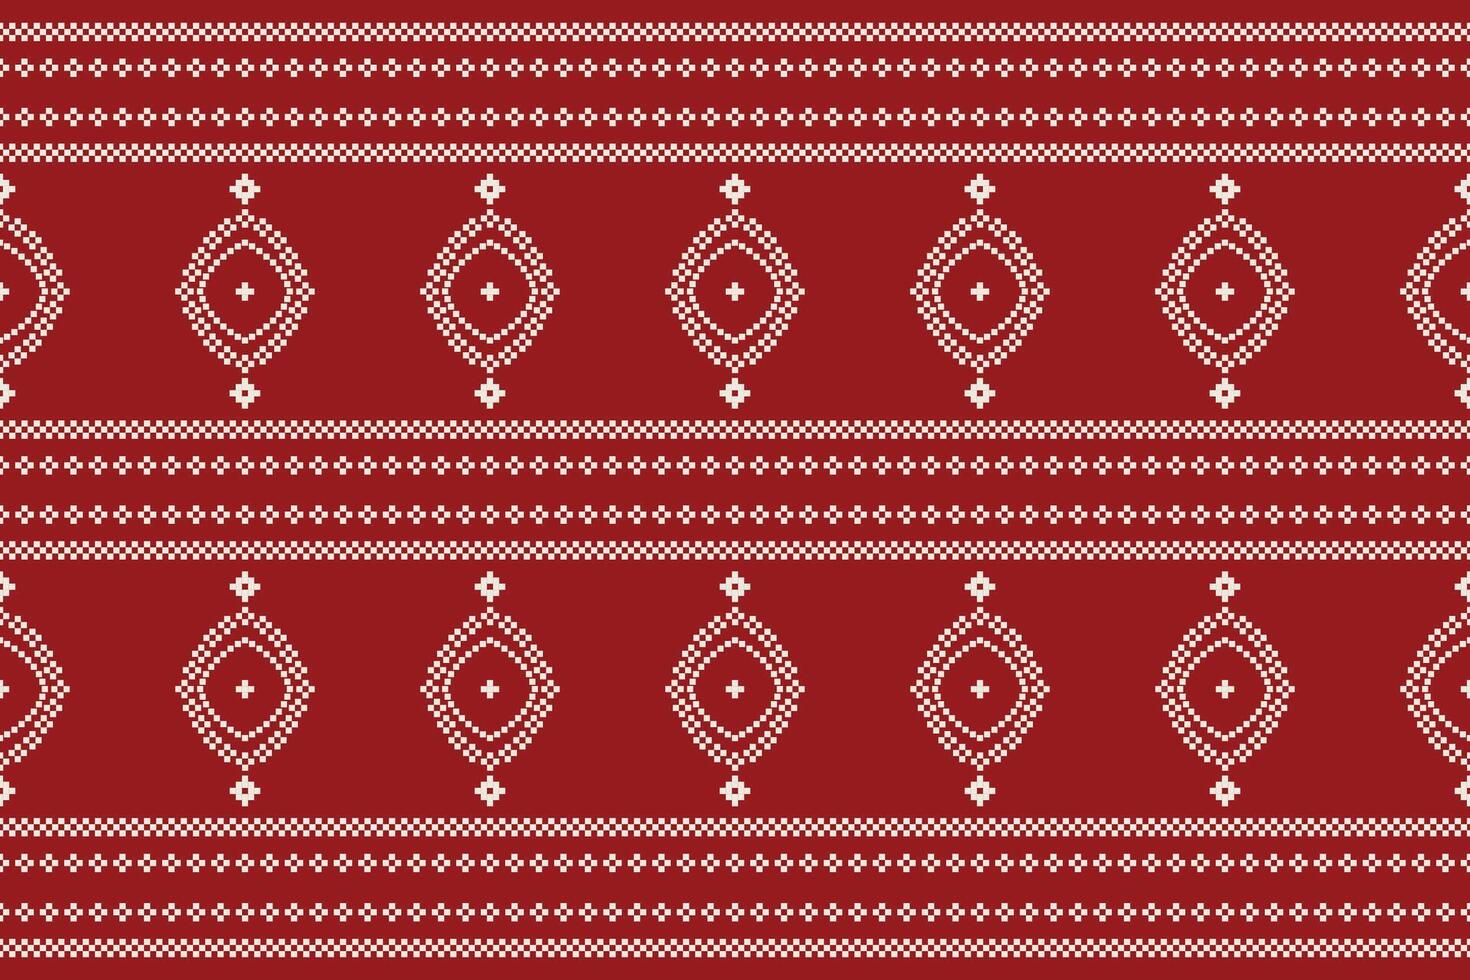 traditionell etnisk motiv ikat geometrisk tyg mönster korsa stitch.ikat broderi etnisk orientalisk pixel röd bakgrund. abstrakt,, illustration. textur, jul, dekoration, tapeter. vektor